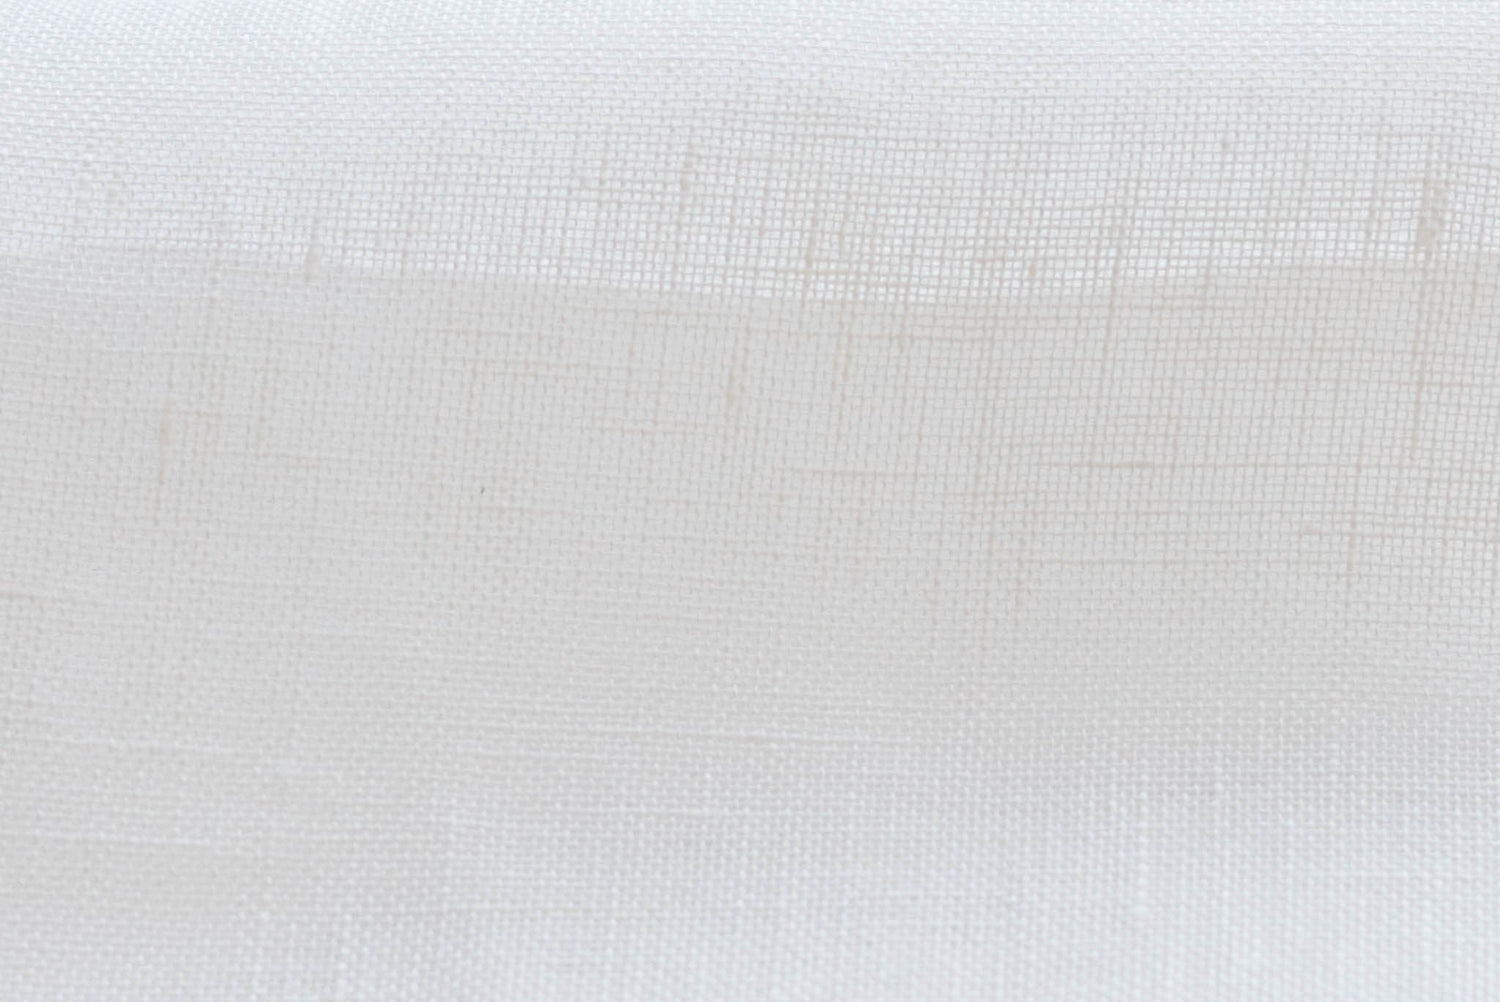 ANTWERP - 100% Belgian Linen Sheer Curtains - WhiteAntwerp collection, featuring 100% Belgian linen, woven in one of the six Belgium Linen factory in Belgium with 150 years of linen weaving history.Material: 100% BelDecorPassionsANTWERP - 100% Belgian Linen Sheer Curtains - White